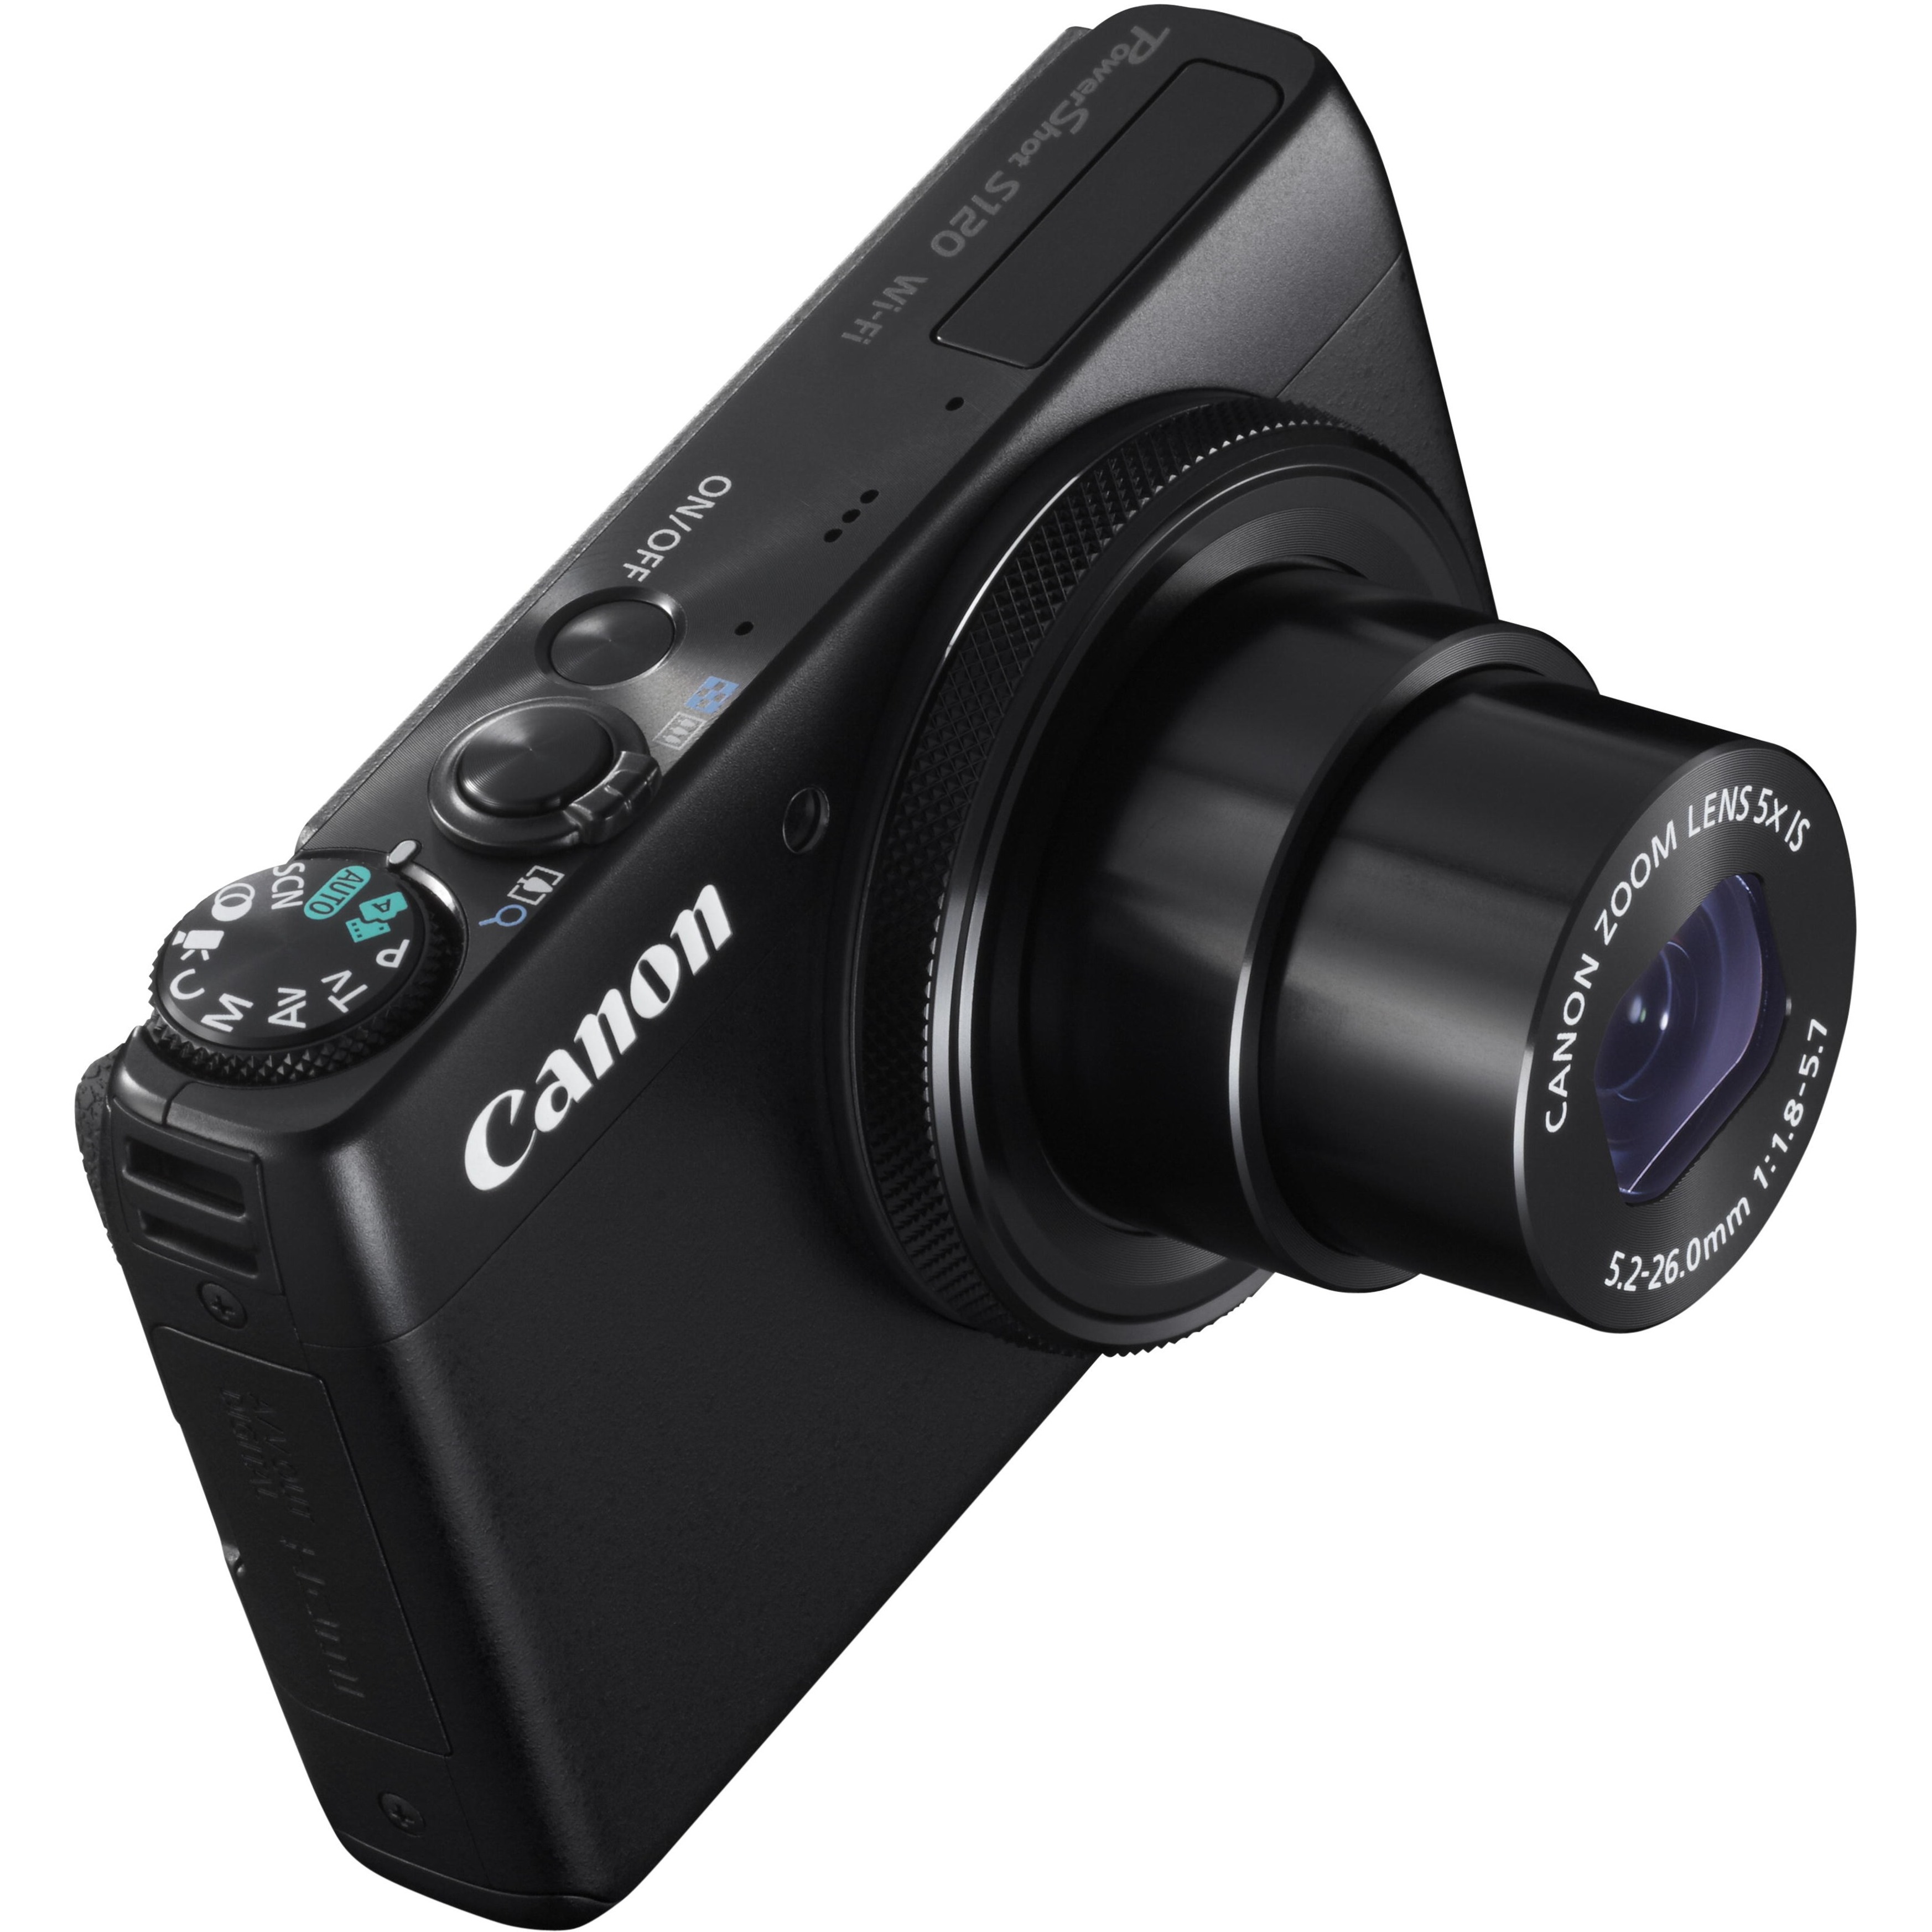 Canon PowerShot S120 12.1 Megapixel Compact Camera, Black - image 3 of 6